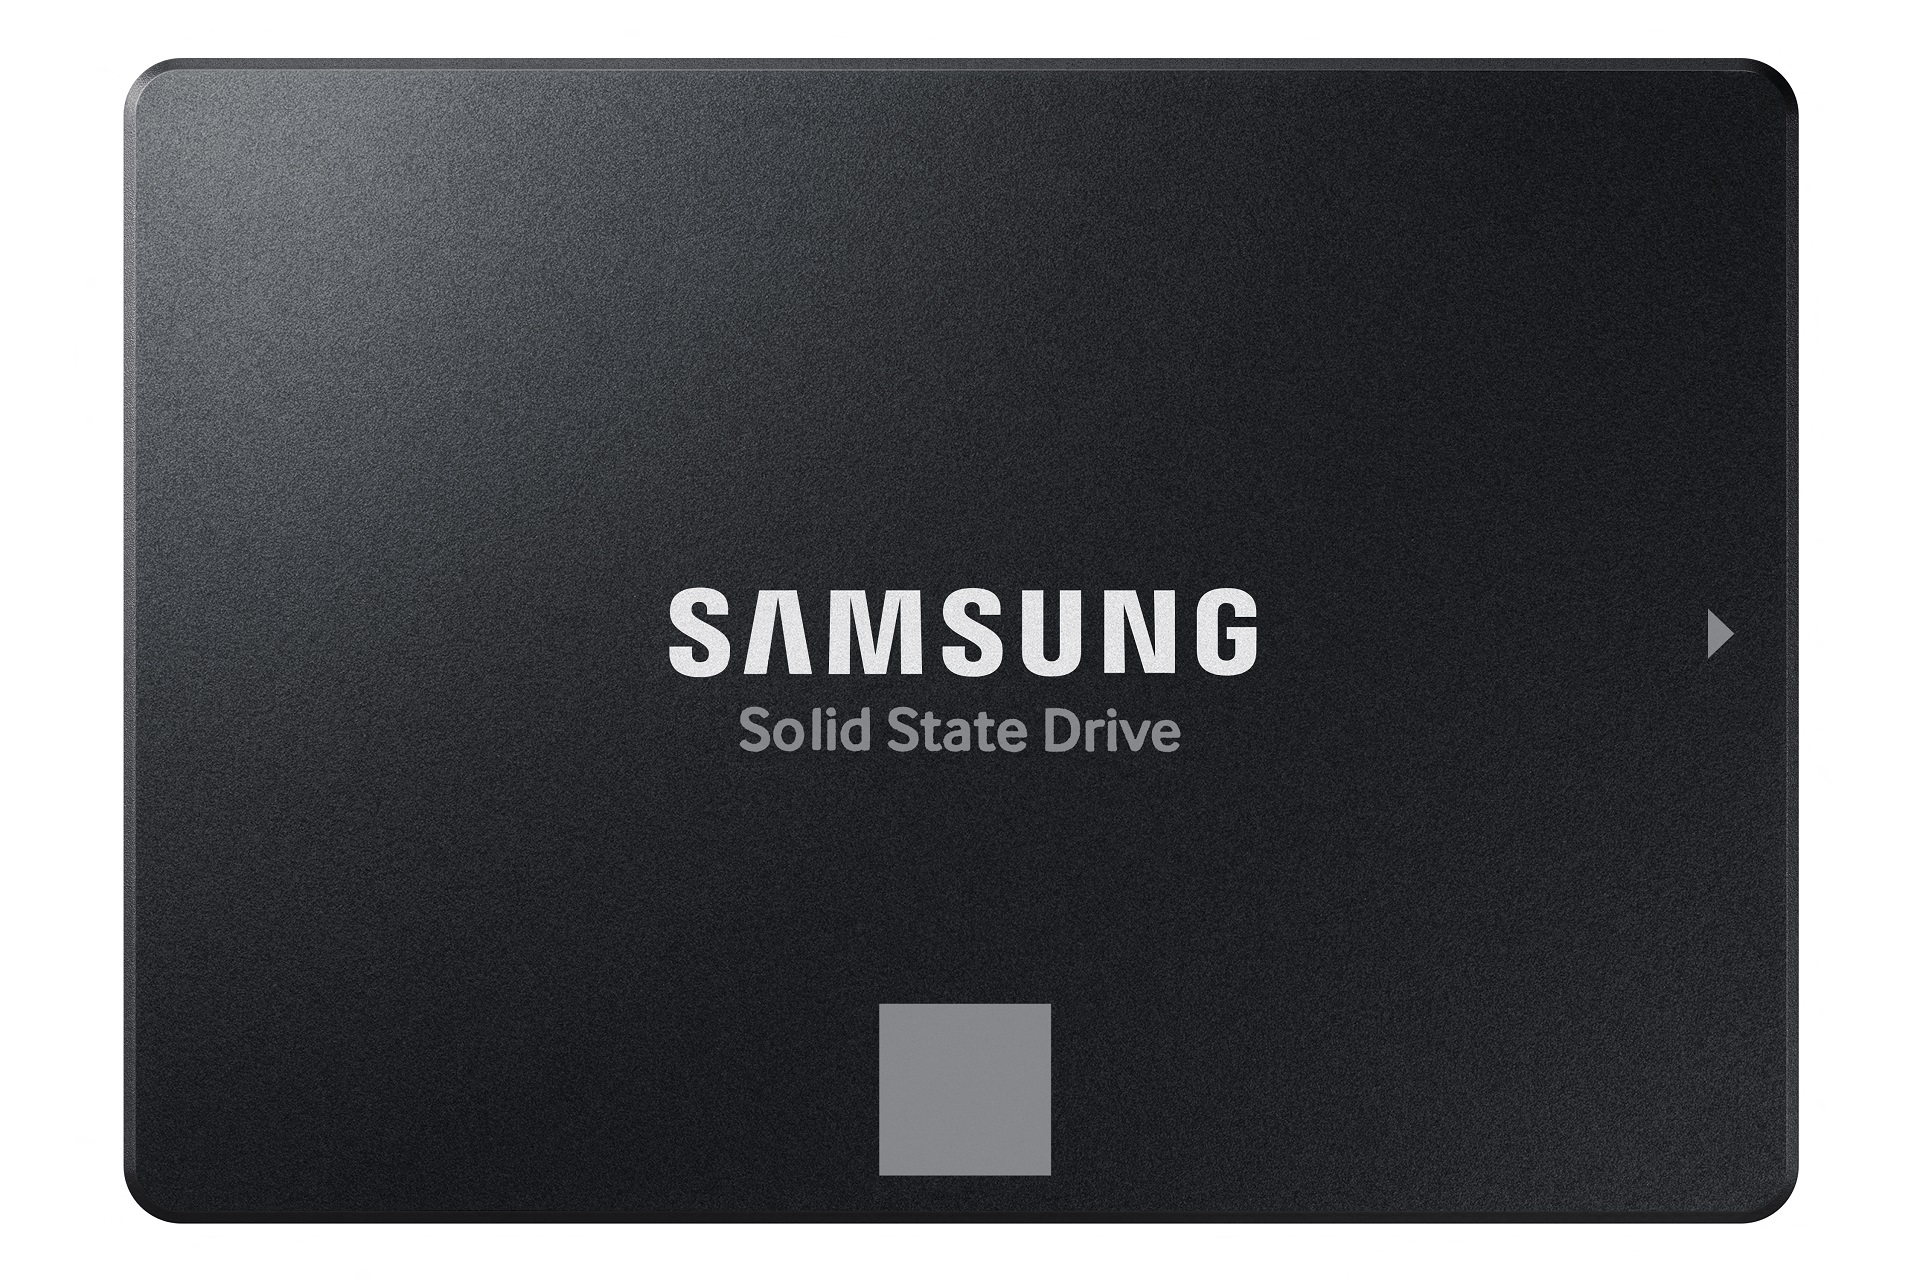 Media asset in full size related to 3dfxzone.it news item entitled as follows: Samsung annuncia i drive SSD da 2.5-inch 870 EVO con interfaccia SATA 6Gbps | Image Name: news31573_Samsung-SSD-870-EVO_2.jpg